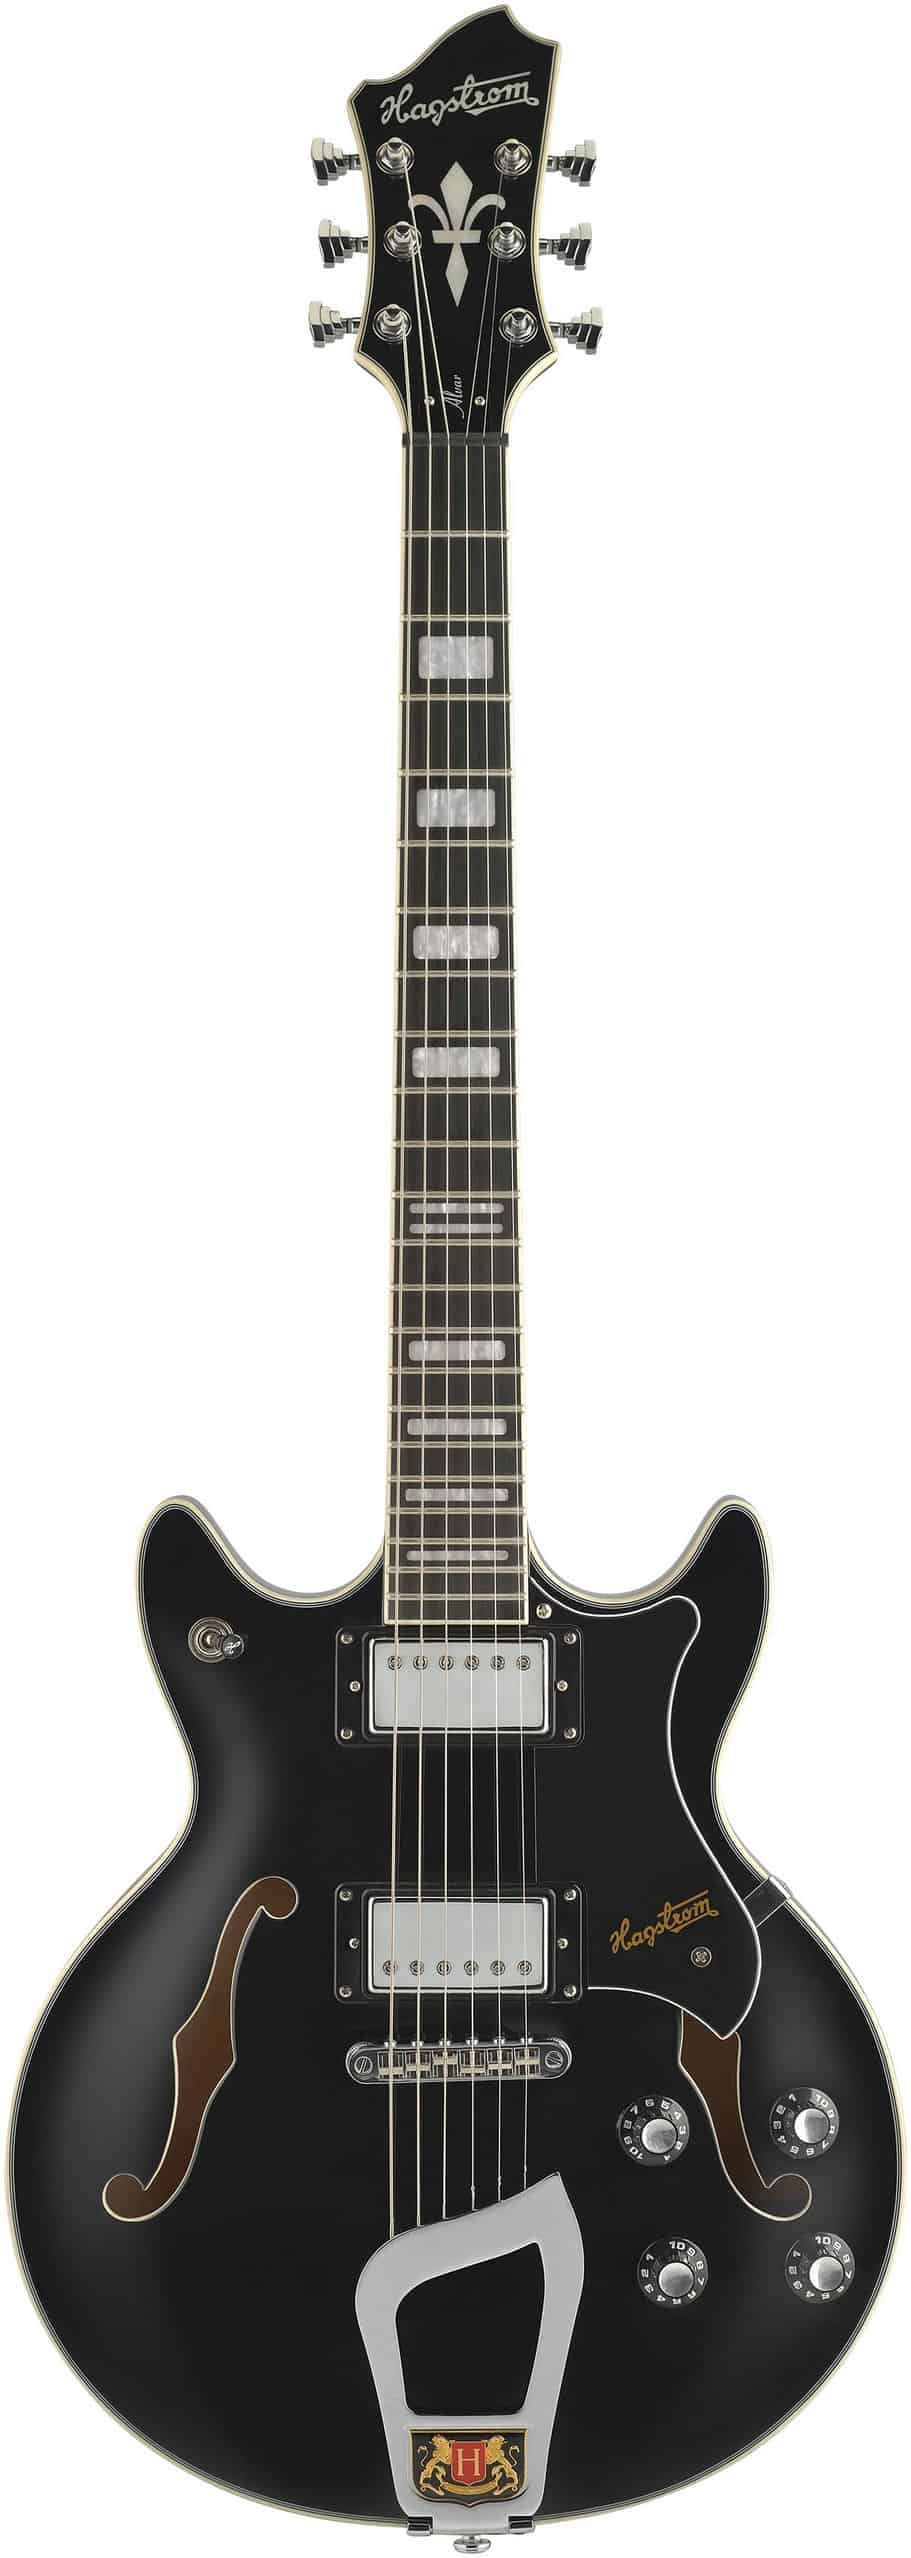 An image of Hagstrom Alvar Electric Guitar, Black Gloss | PMT Online